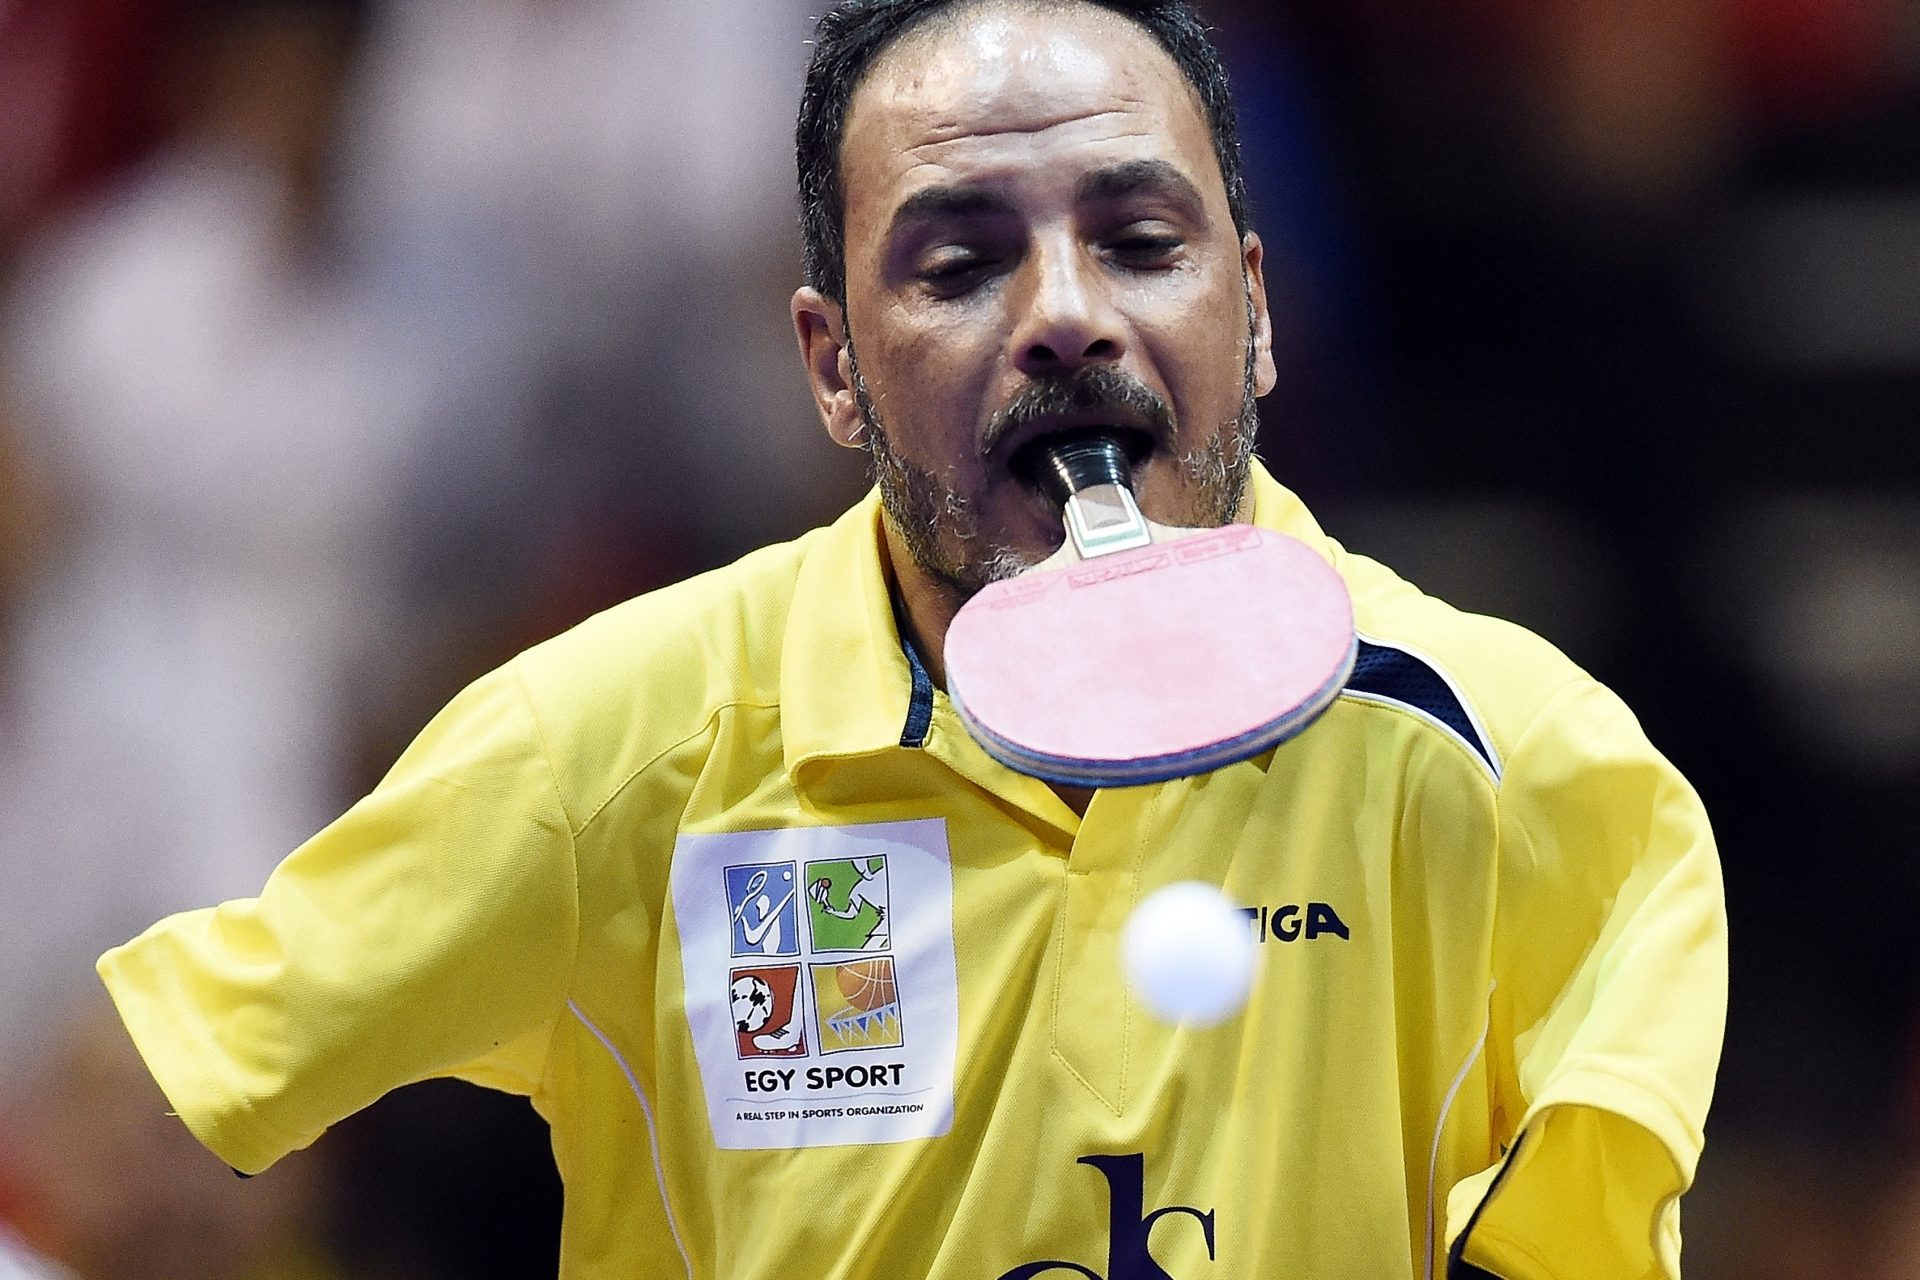 The inspiring story of Ibrahim Hamato – the armless table tennis champion